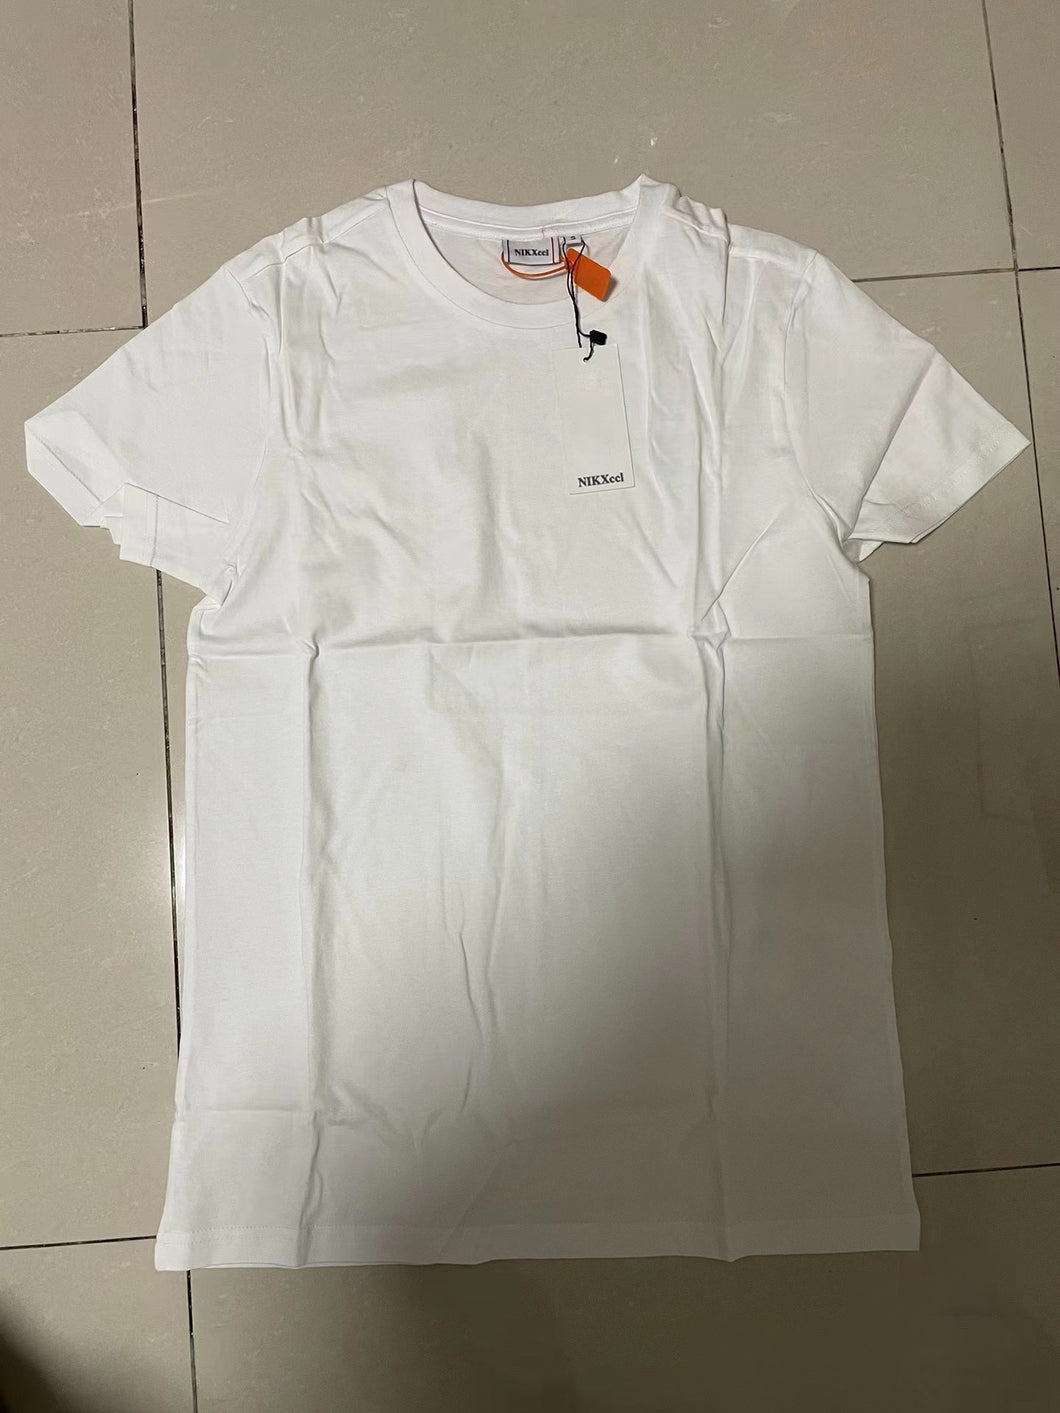 NIKXccl T-Shirt,for Men - Lightweight Cotton Soft Men’s Shirts